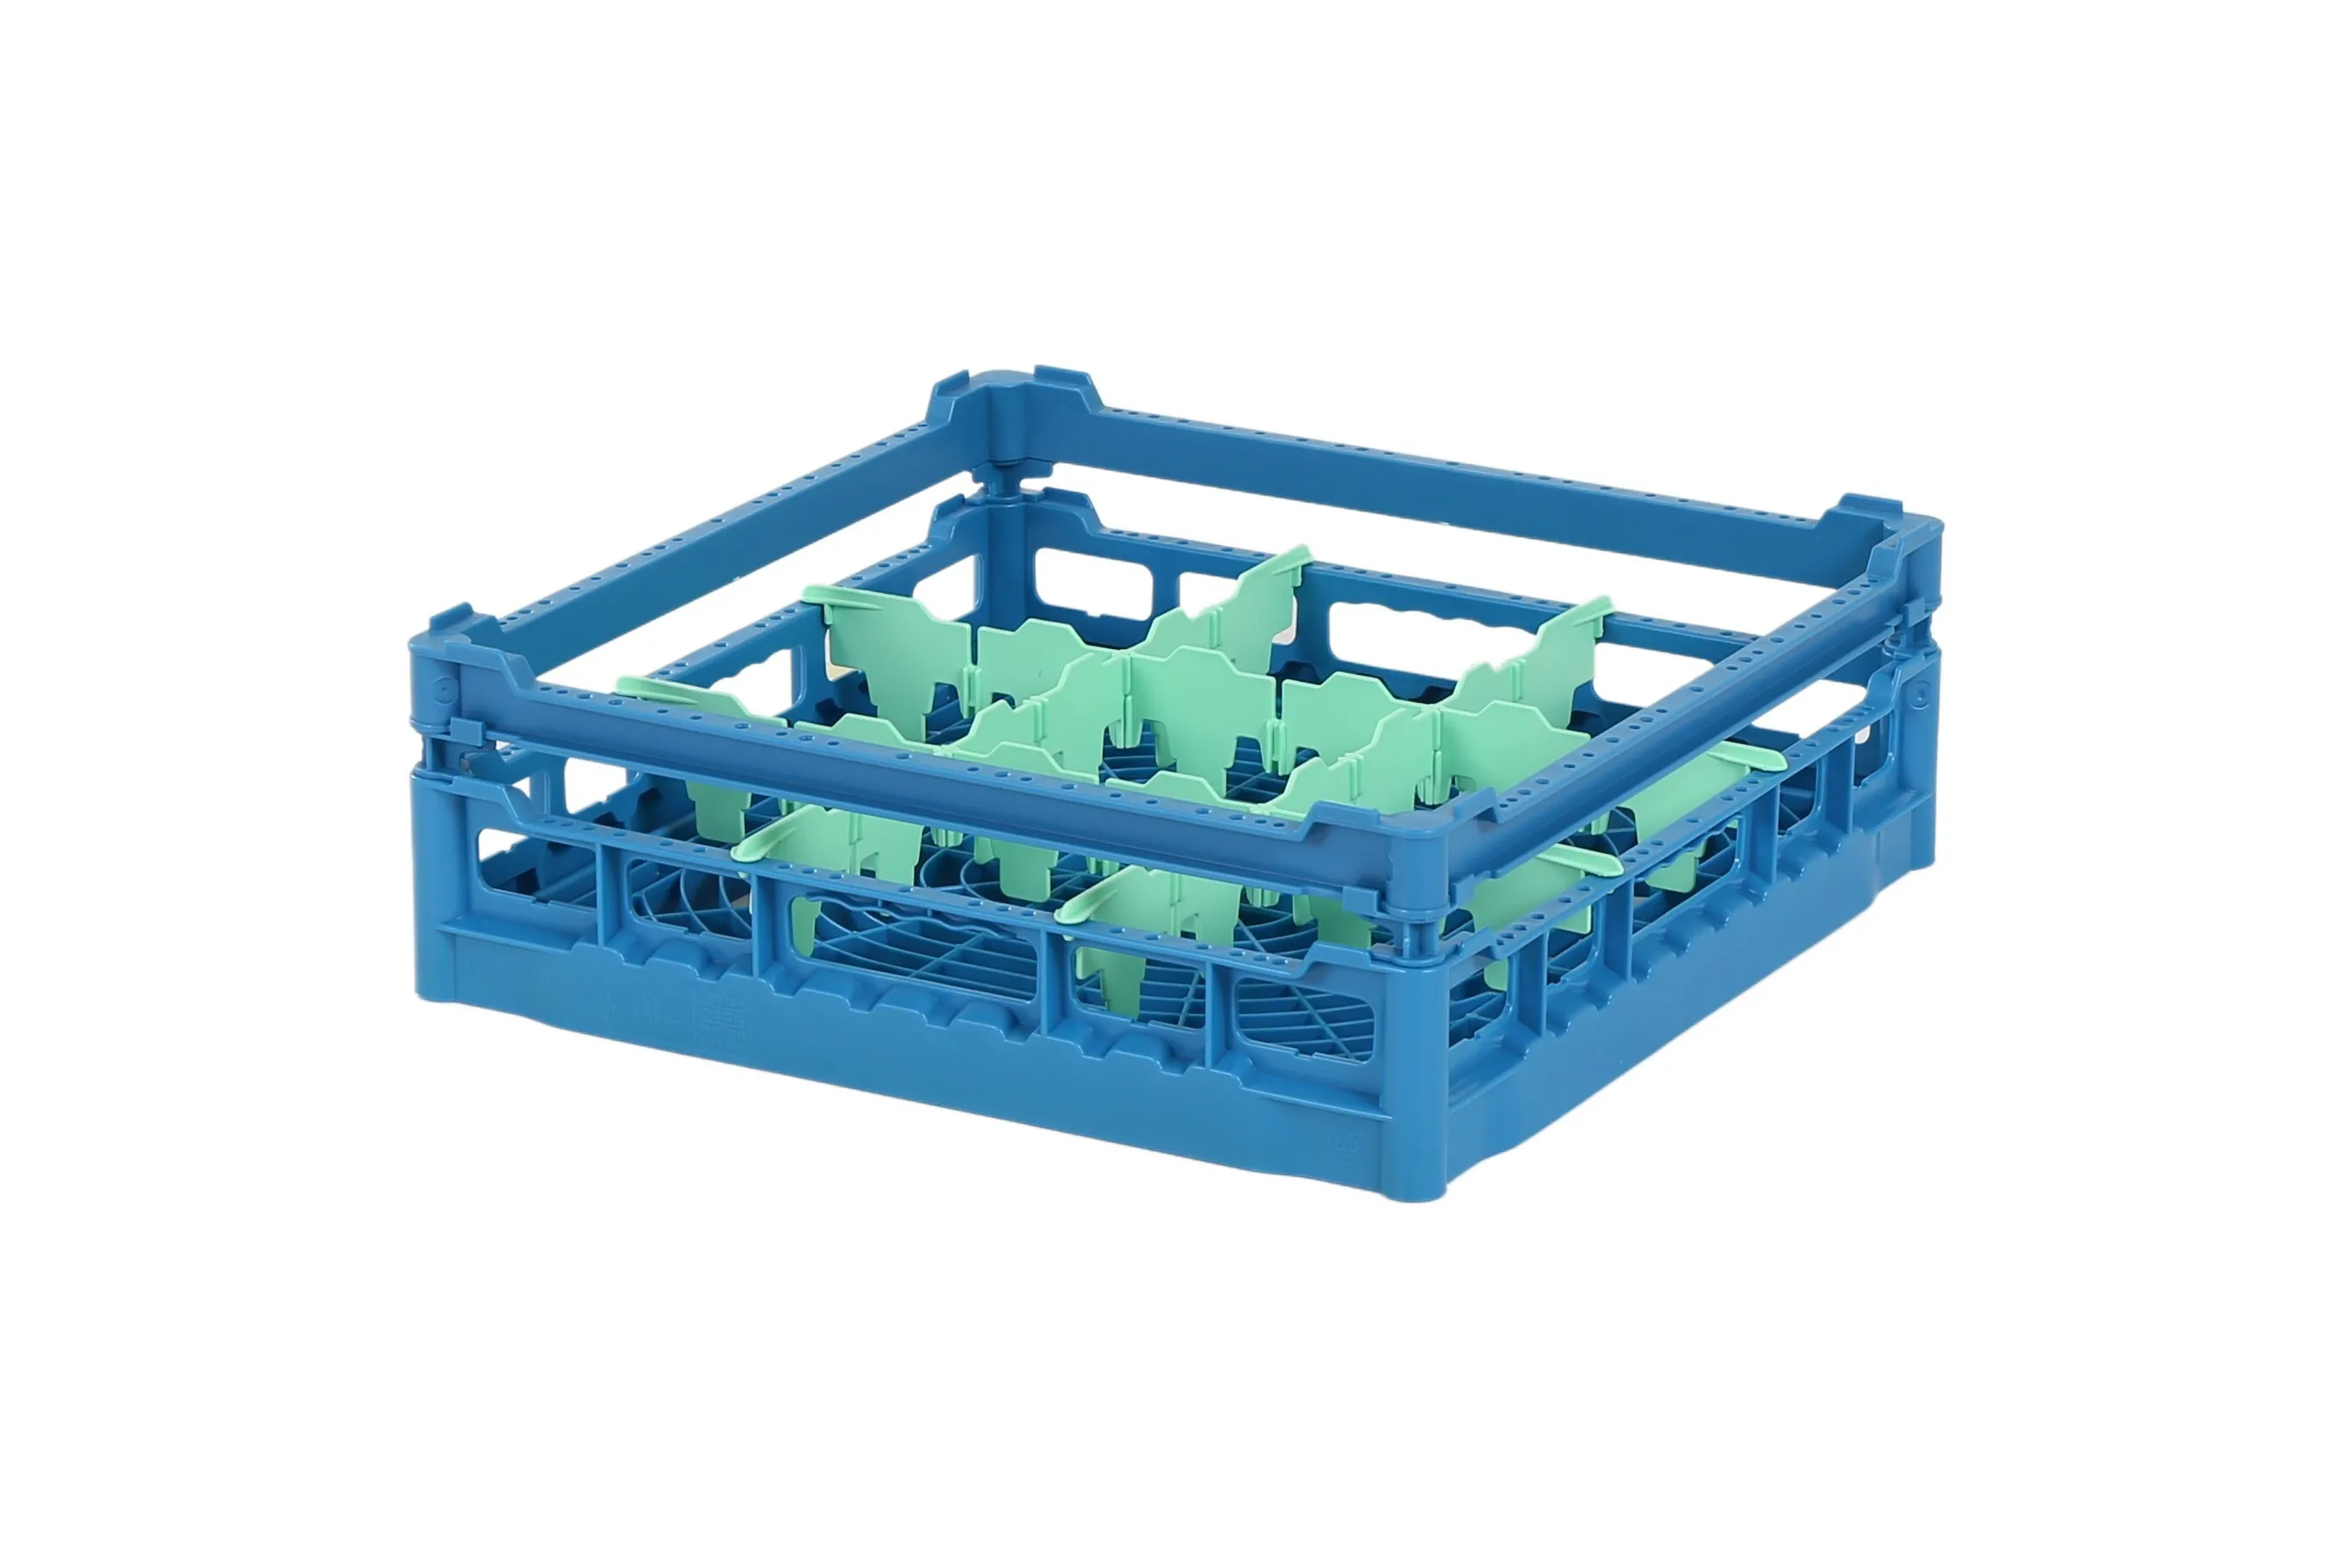 Glass basket 500x500mm blue – maximum glass height 110 mm – with green 3 x 3 compartmentalization – maximum Ø glass 149mm